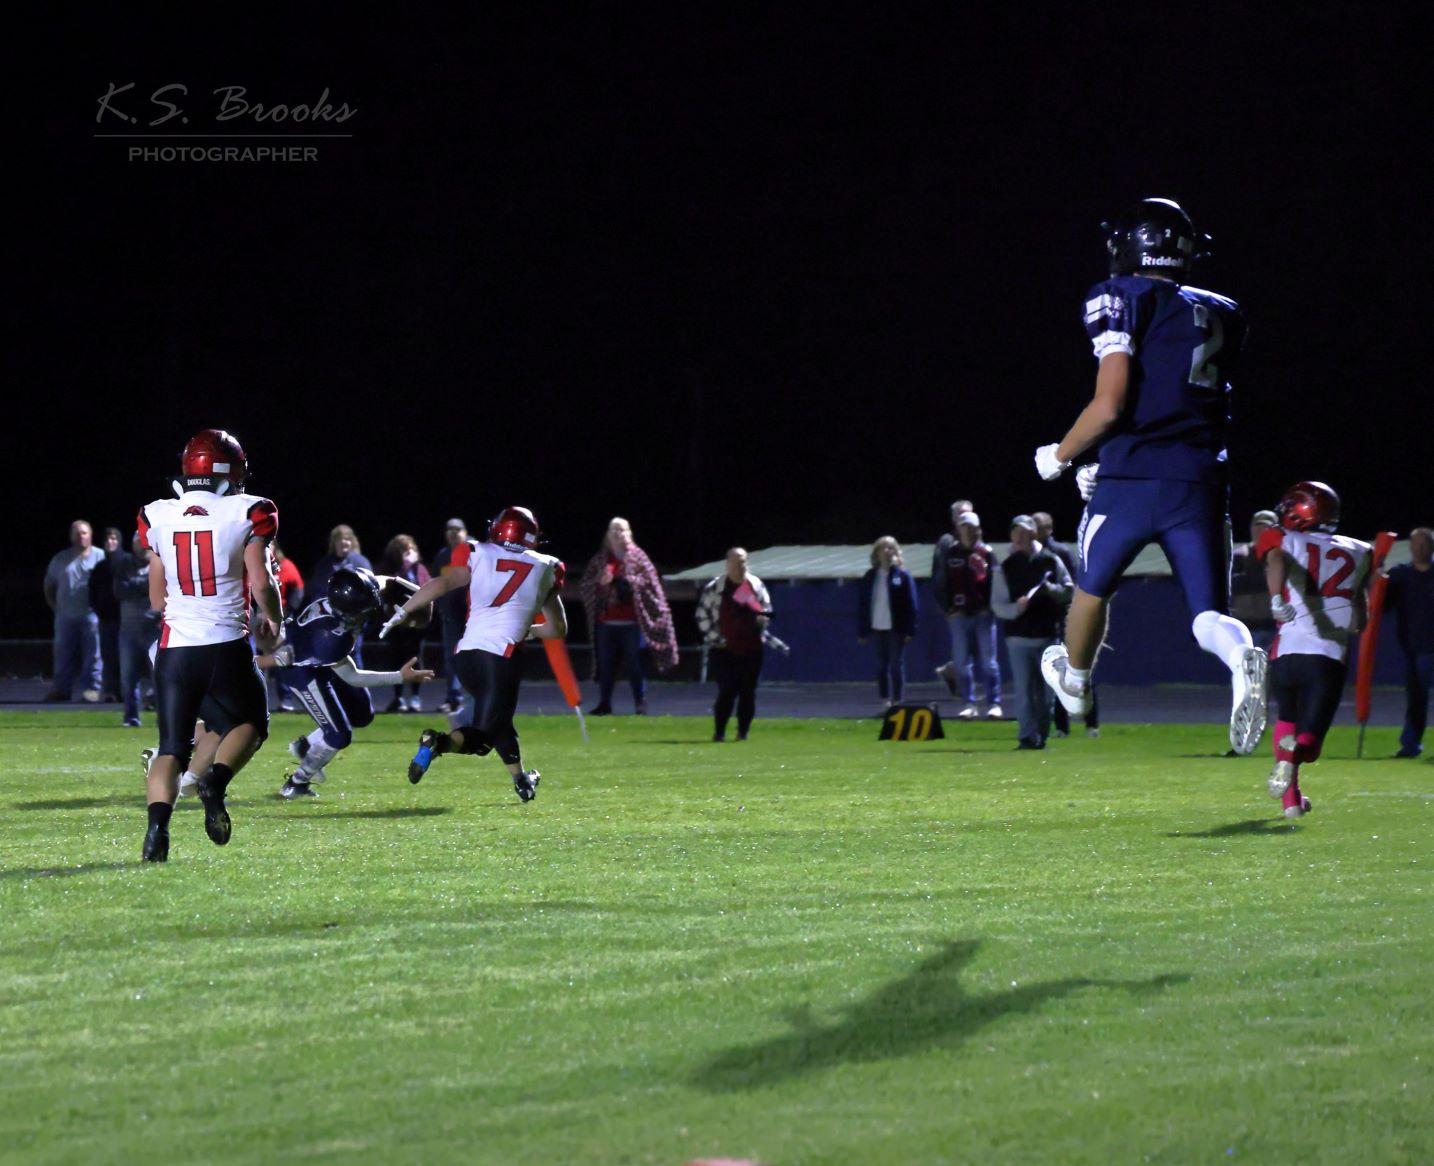 football levitating feet off the ground during game copyright KS Brooks